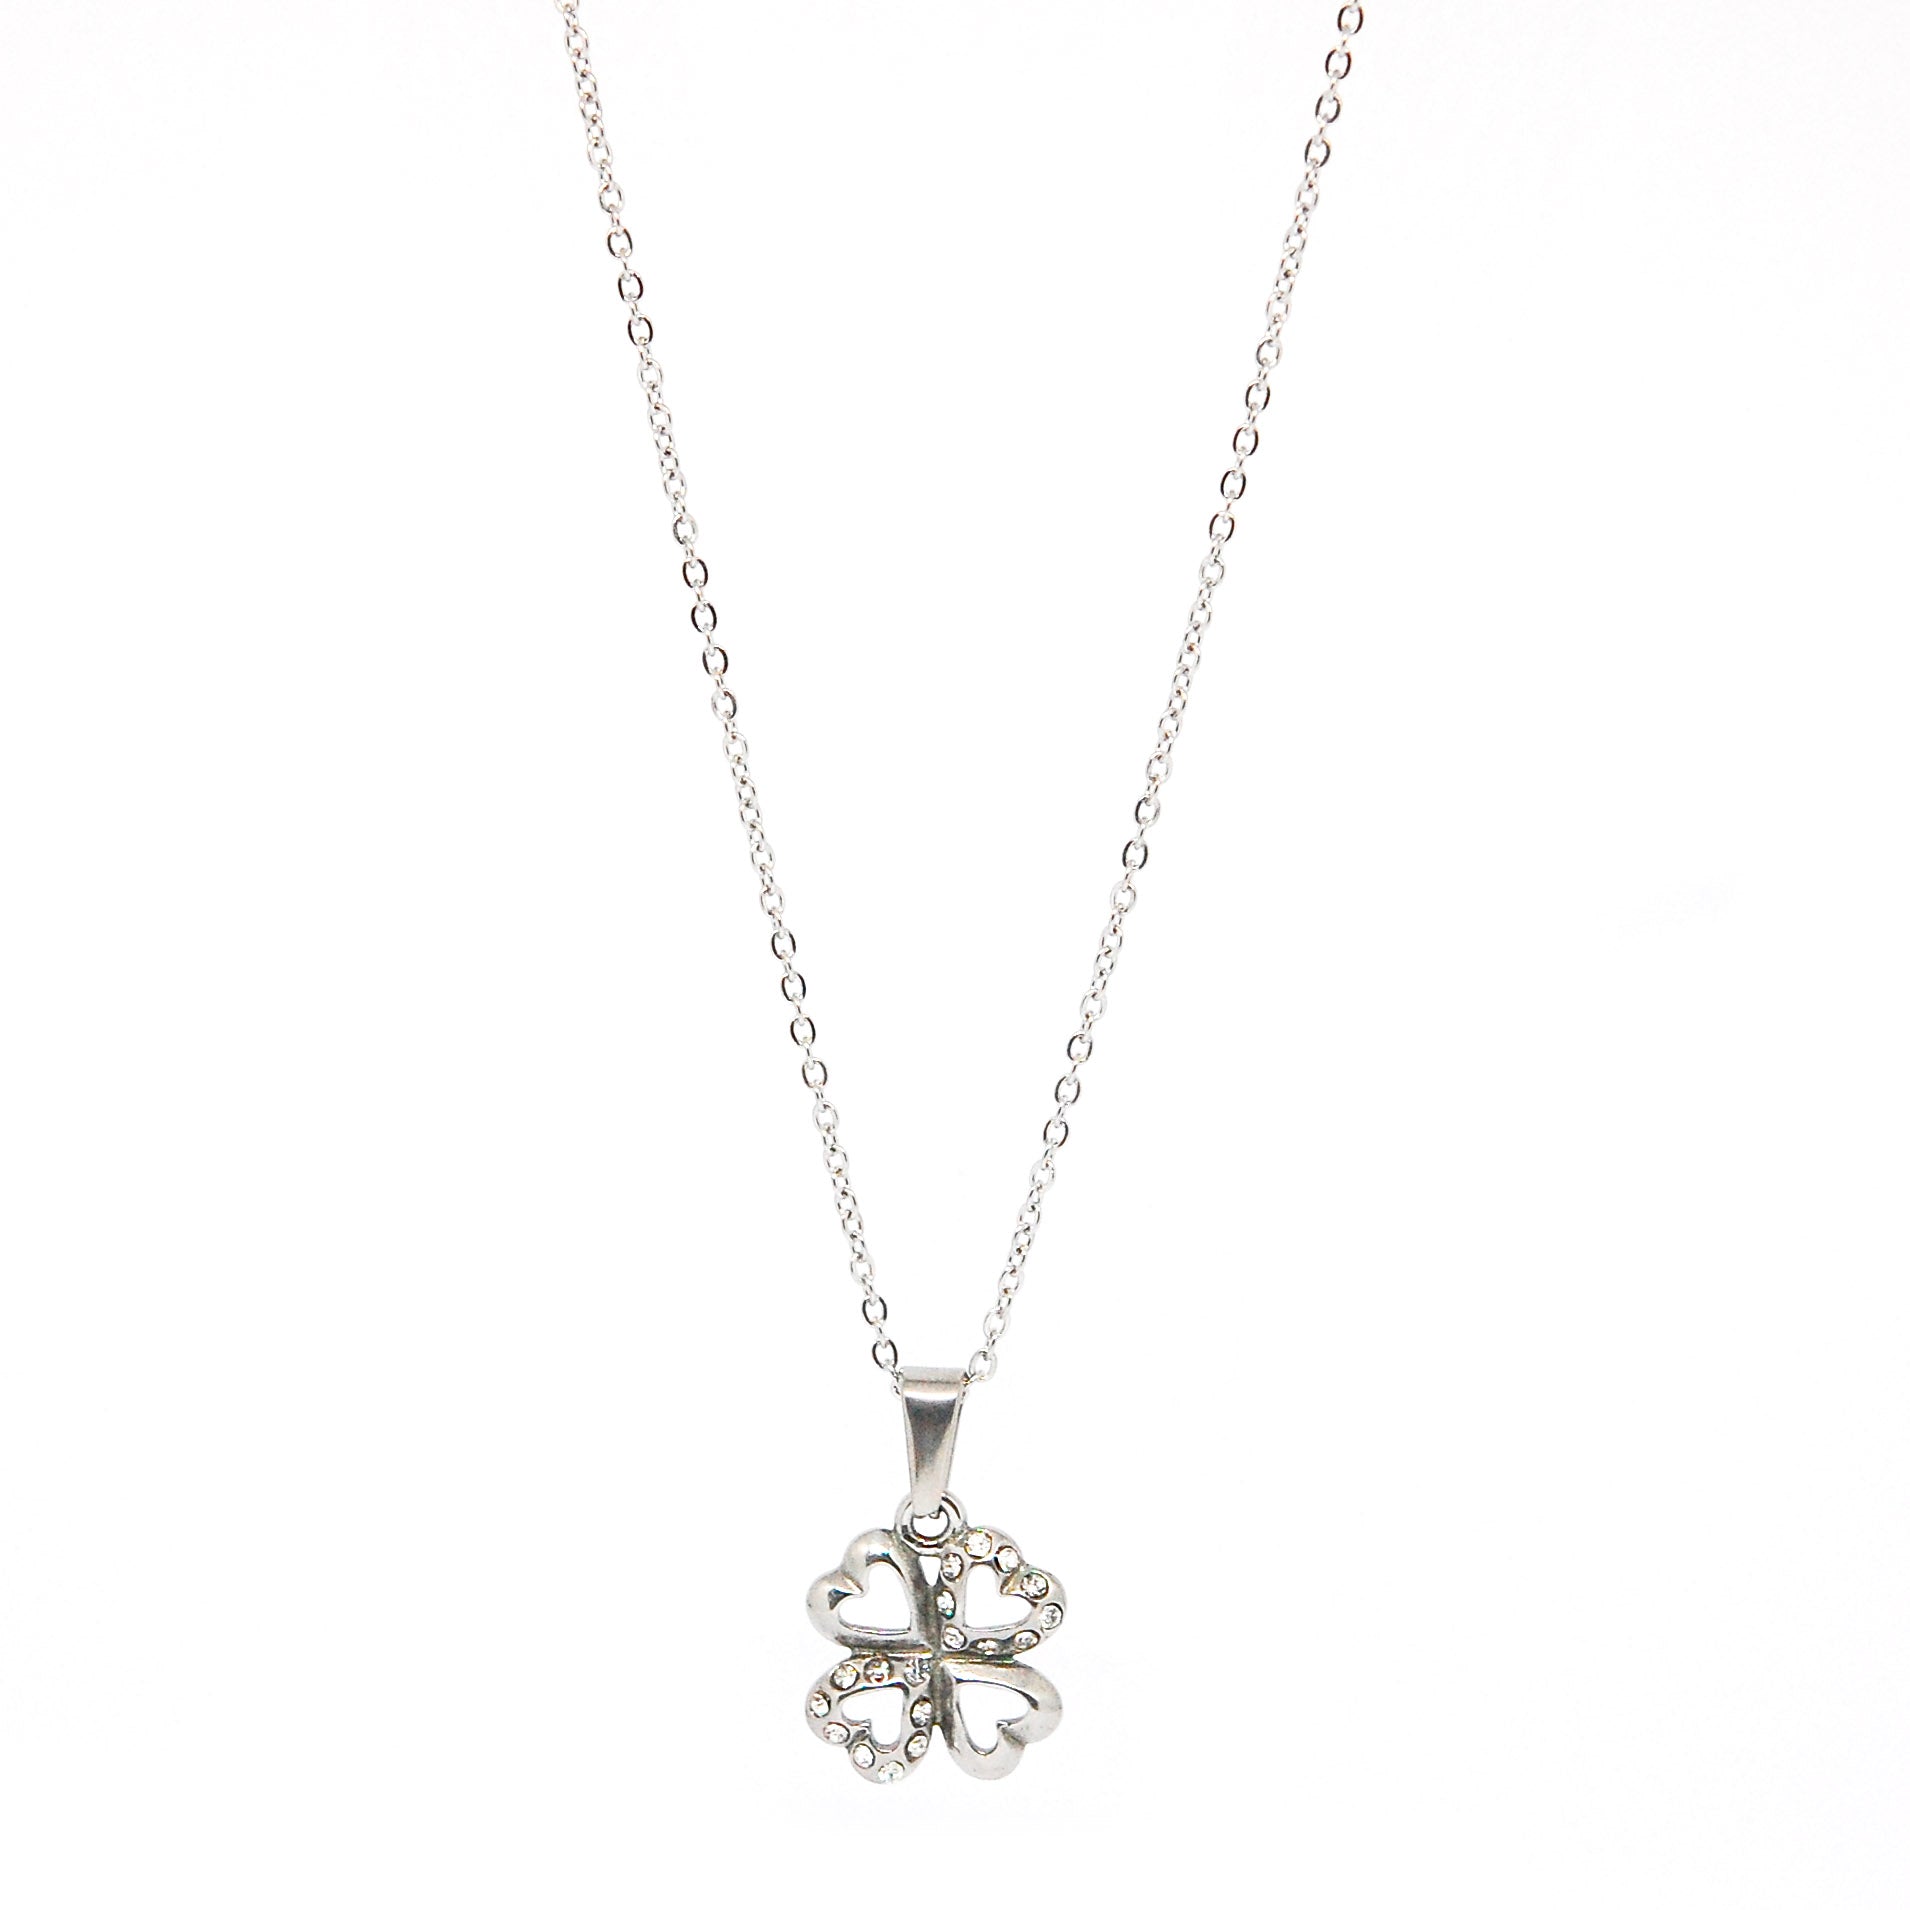 ESN 5725: 18-Cz Studded Lucky Clover Necklace w/ 17" Ultra Thin Chain